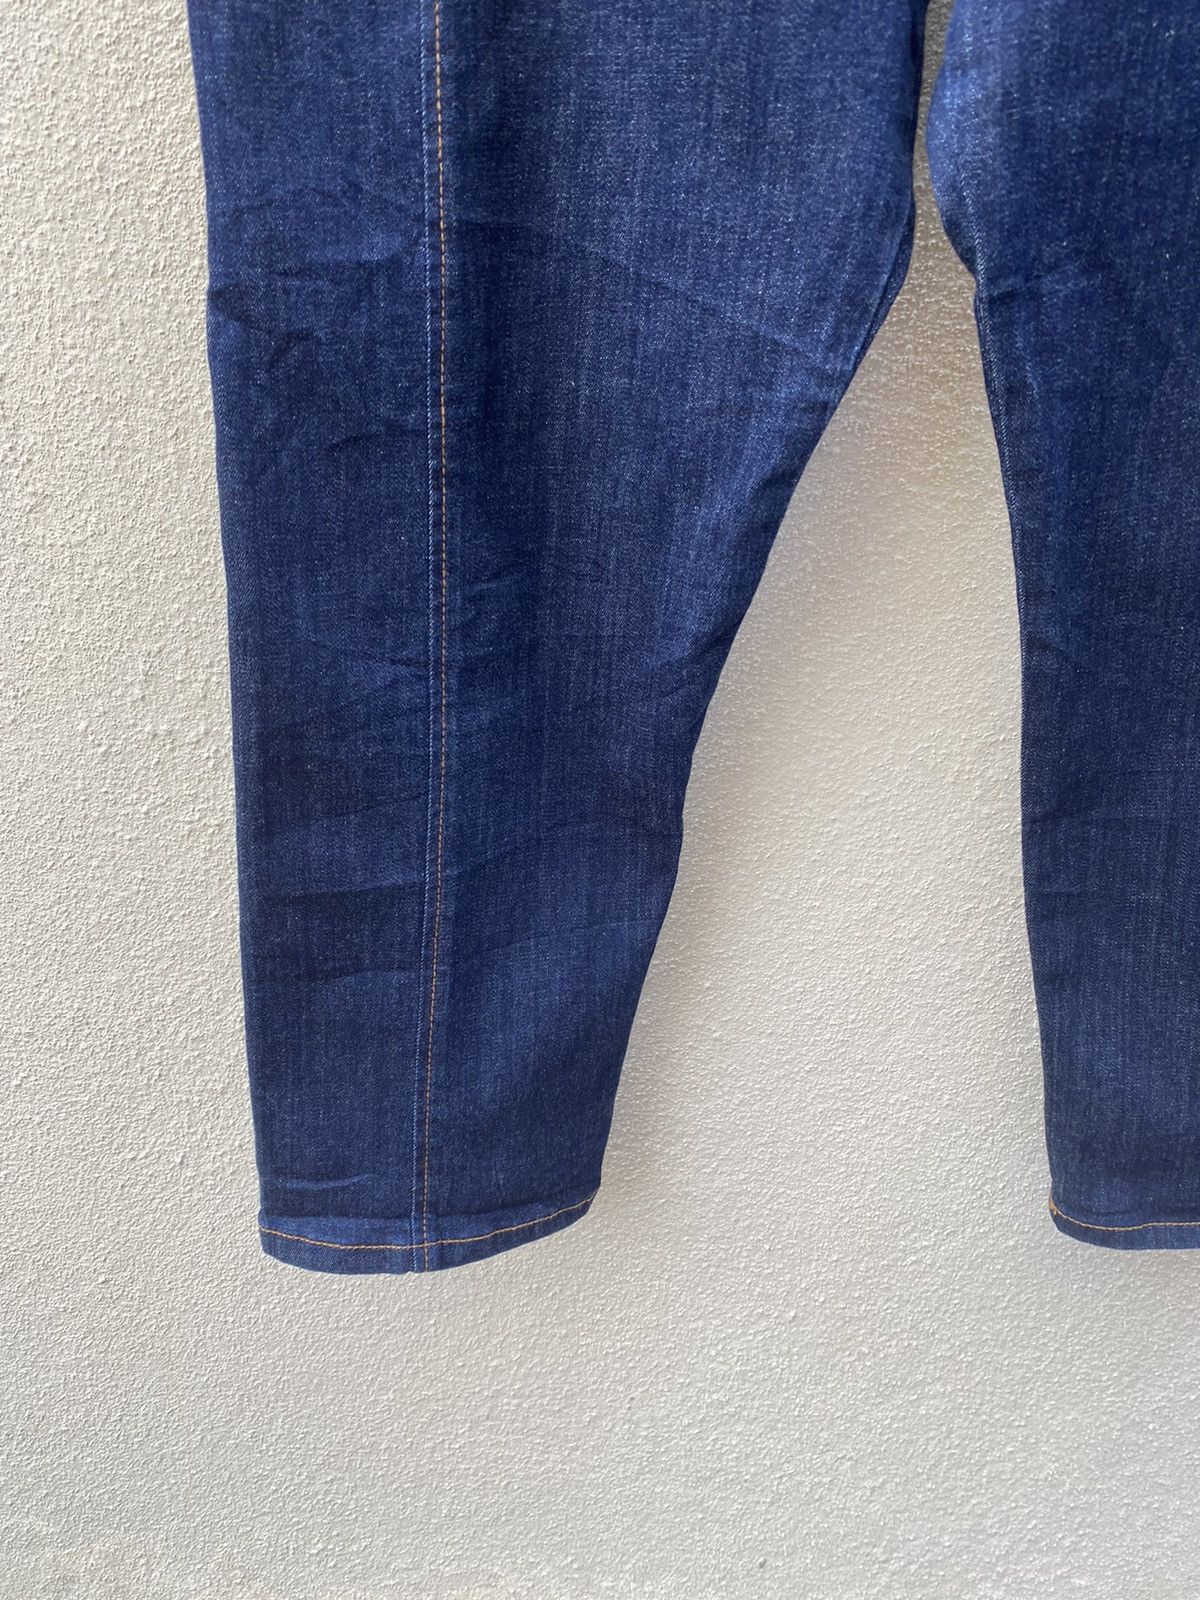 Issey Miyake - ZUCCA Stretchable Denim Jeans - 3